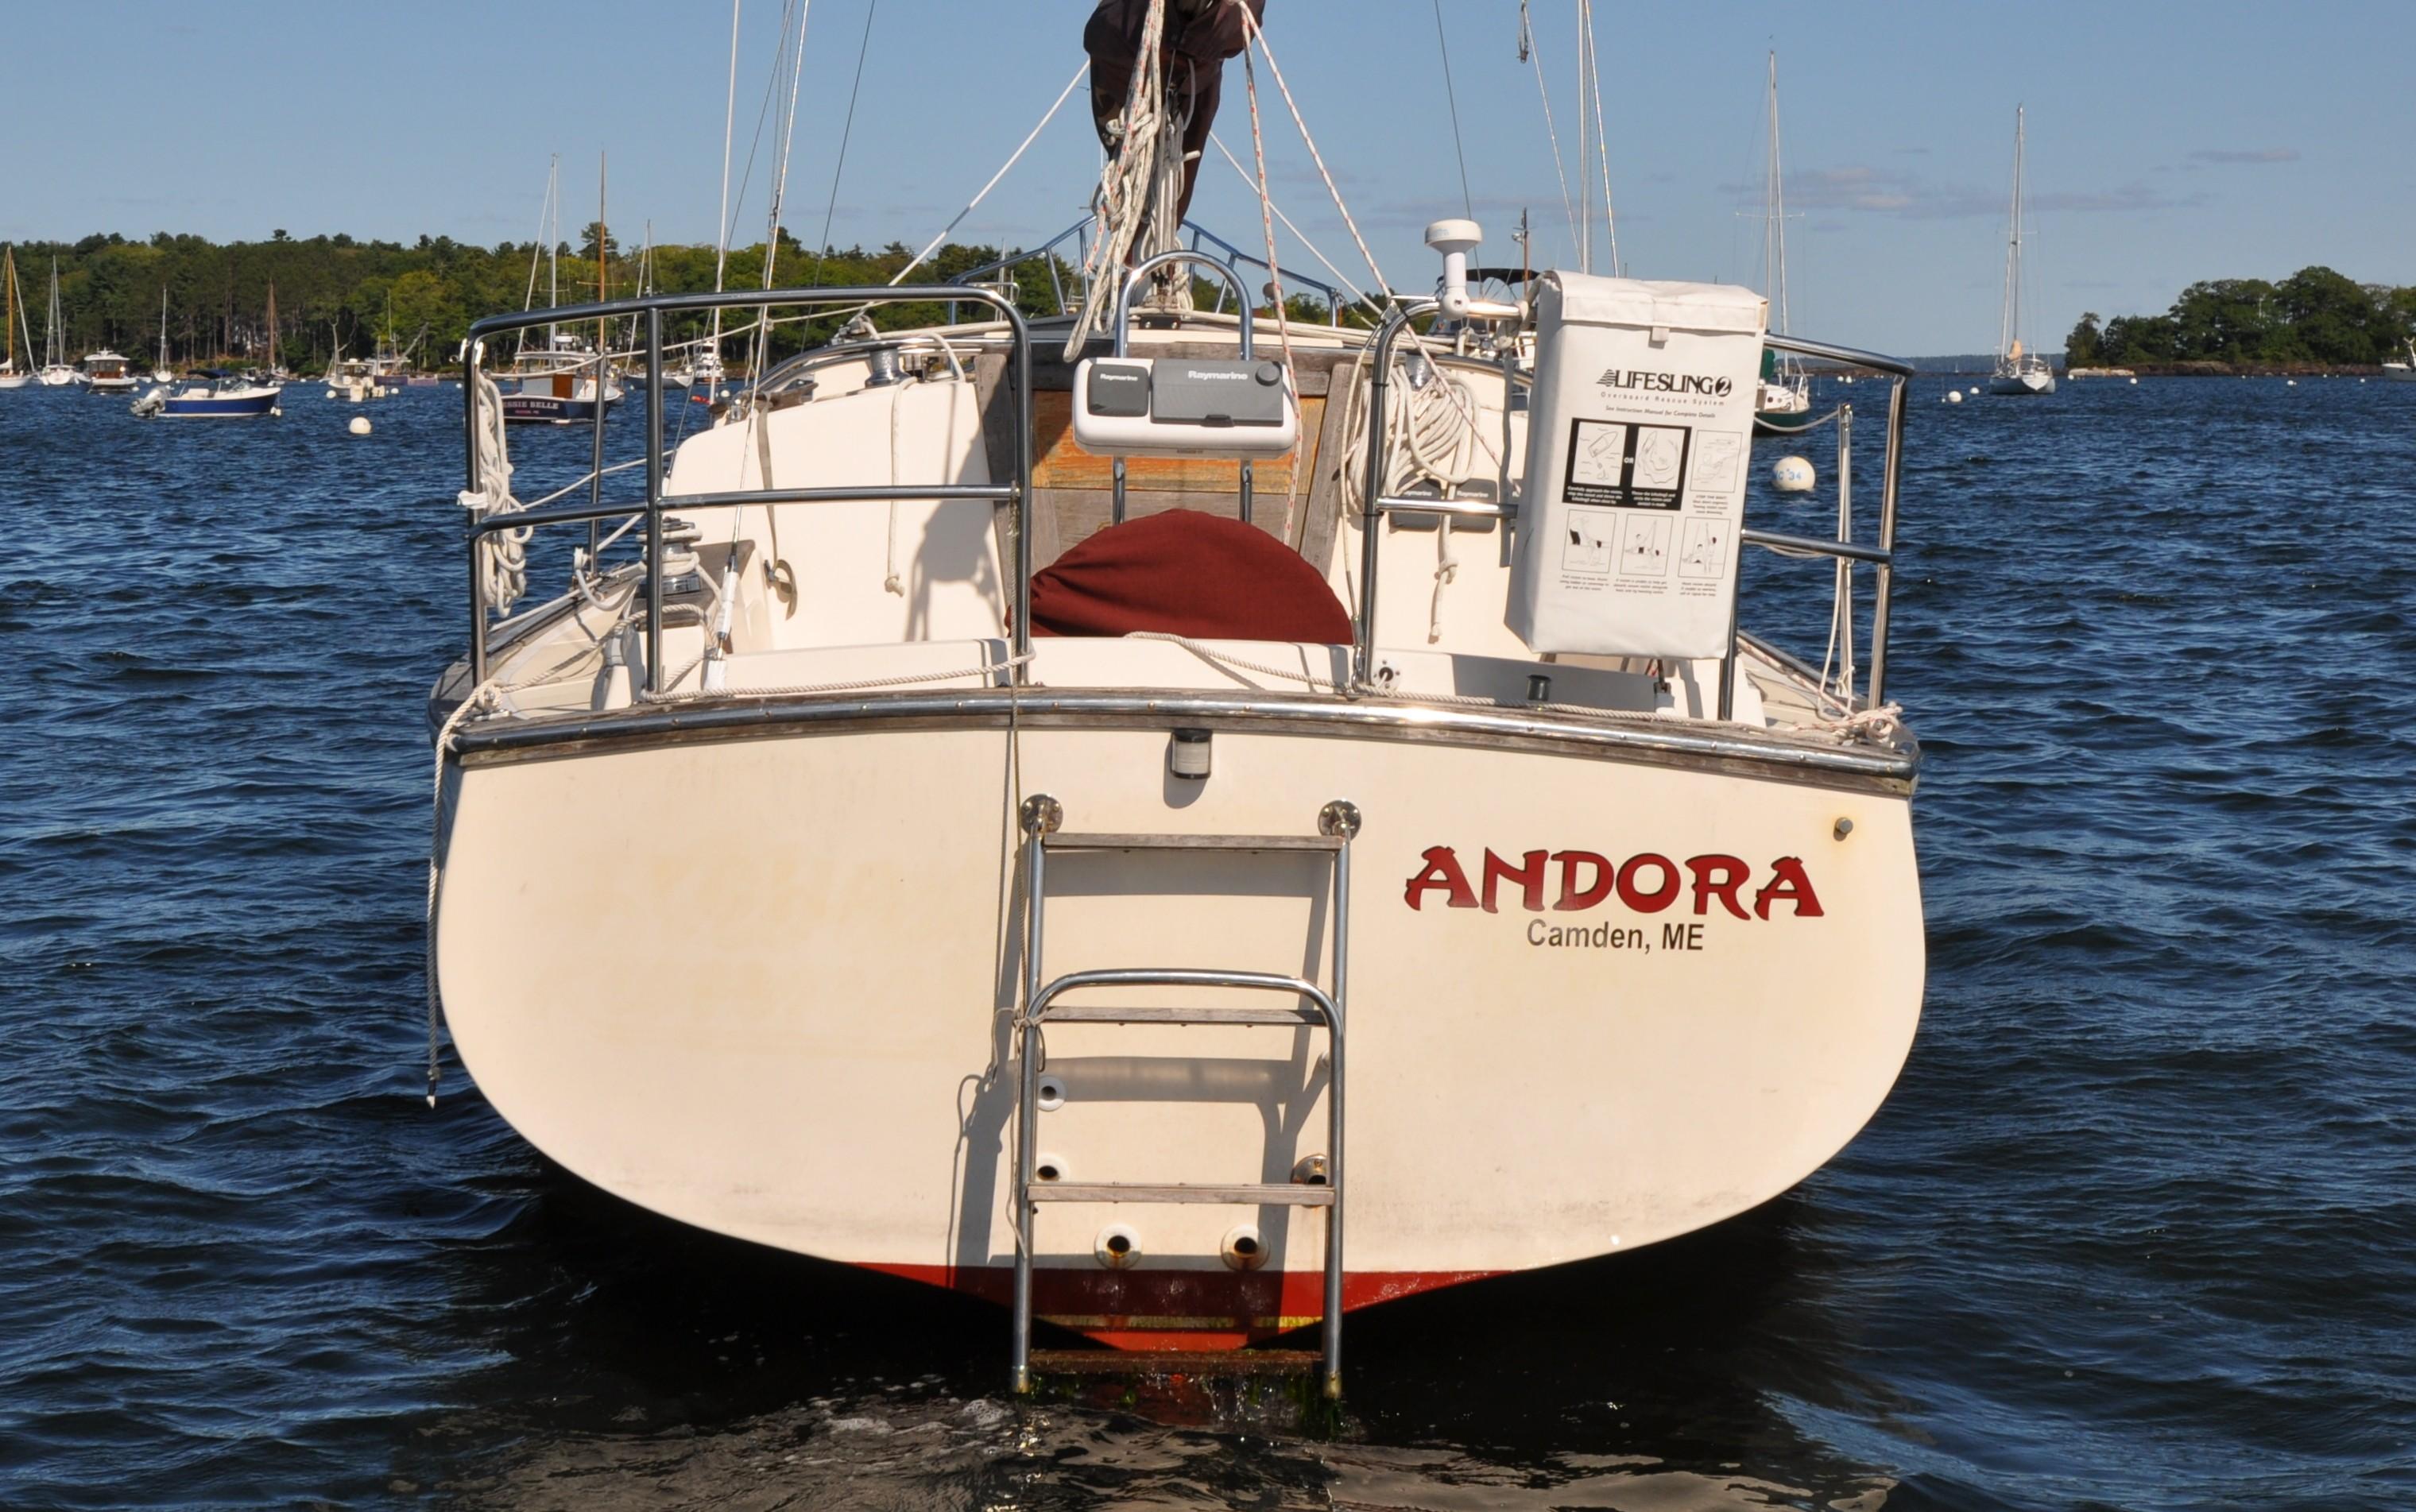 Island Packet 27 - Andora - On Mooring 